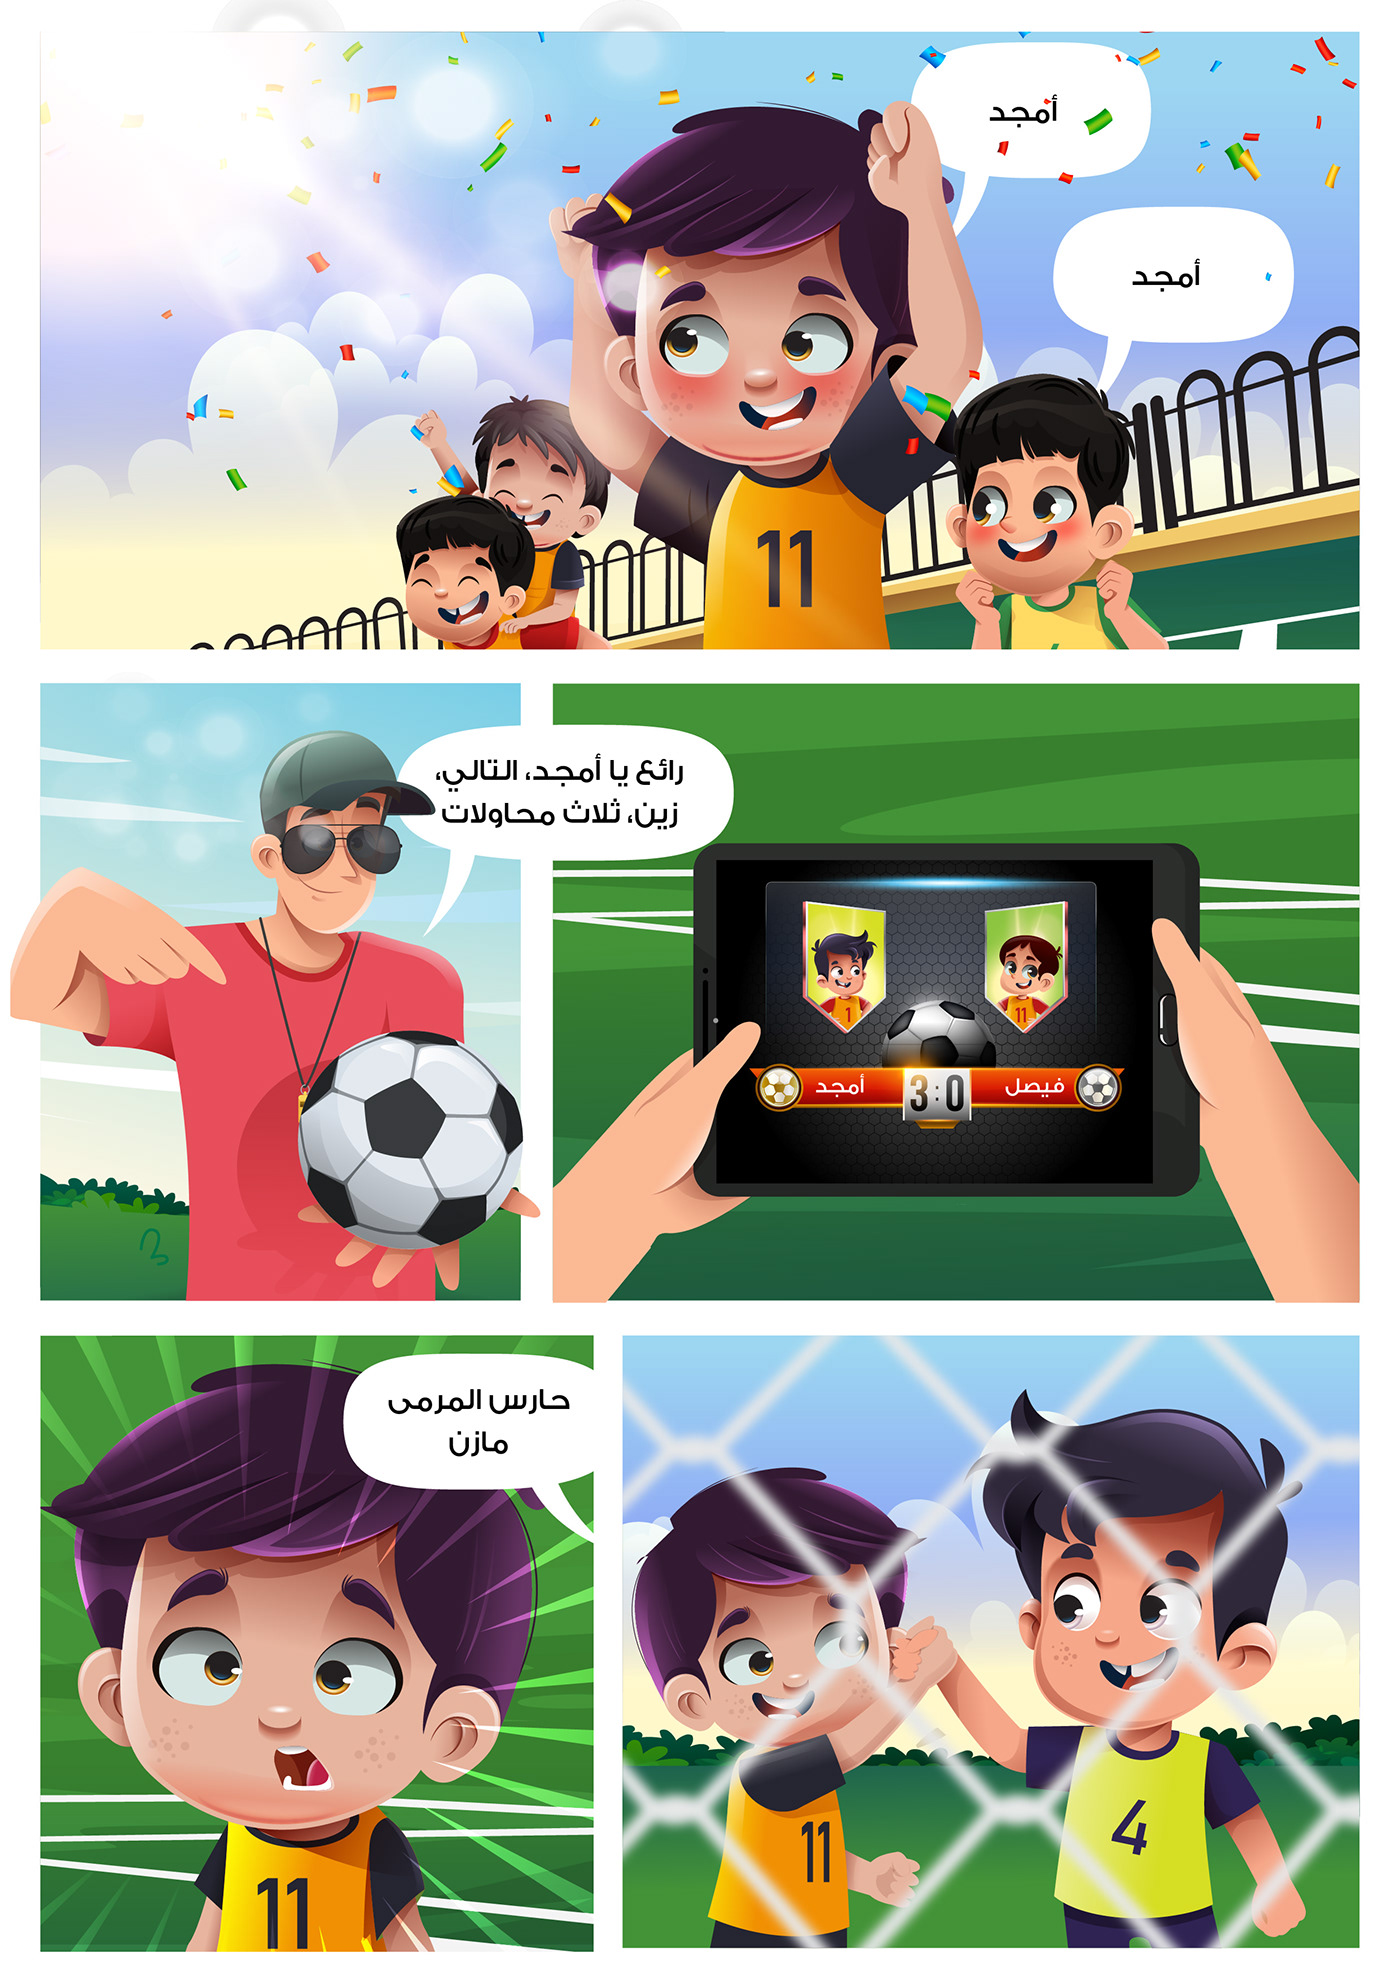 serag basel سراج باسل Saudi Arabia comics book children illustration Arab kids Saudi character kids football player kids story